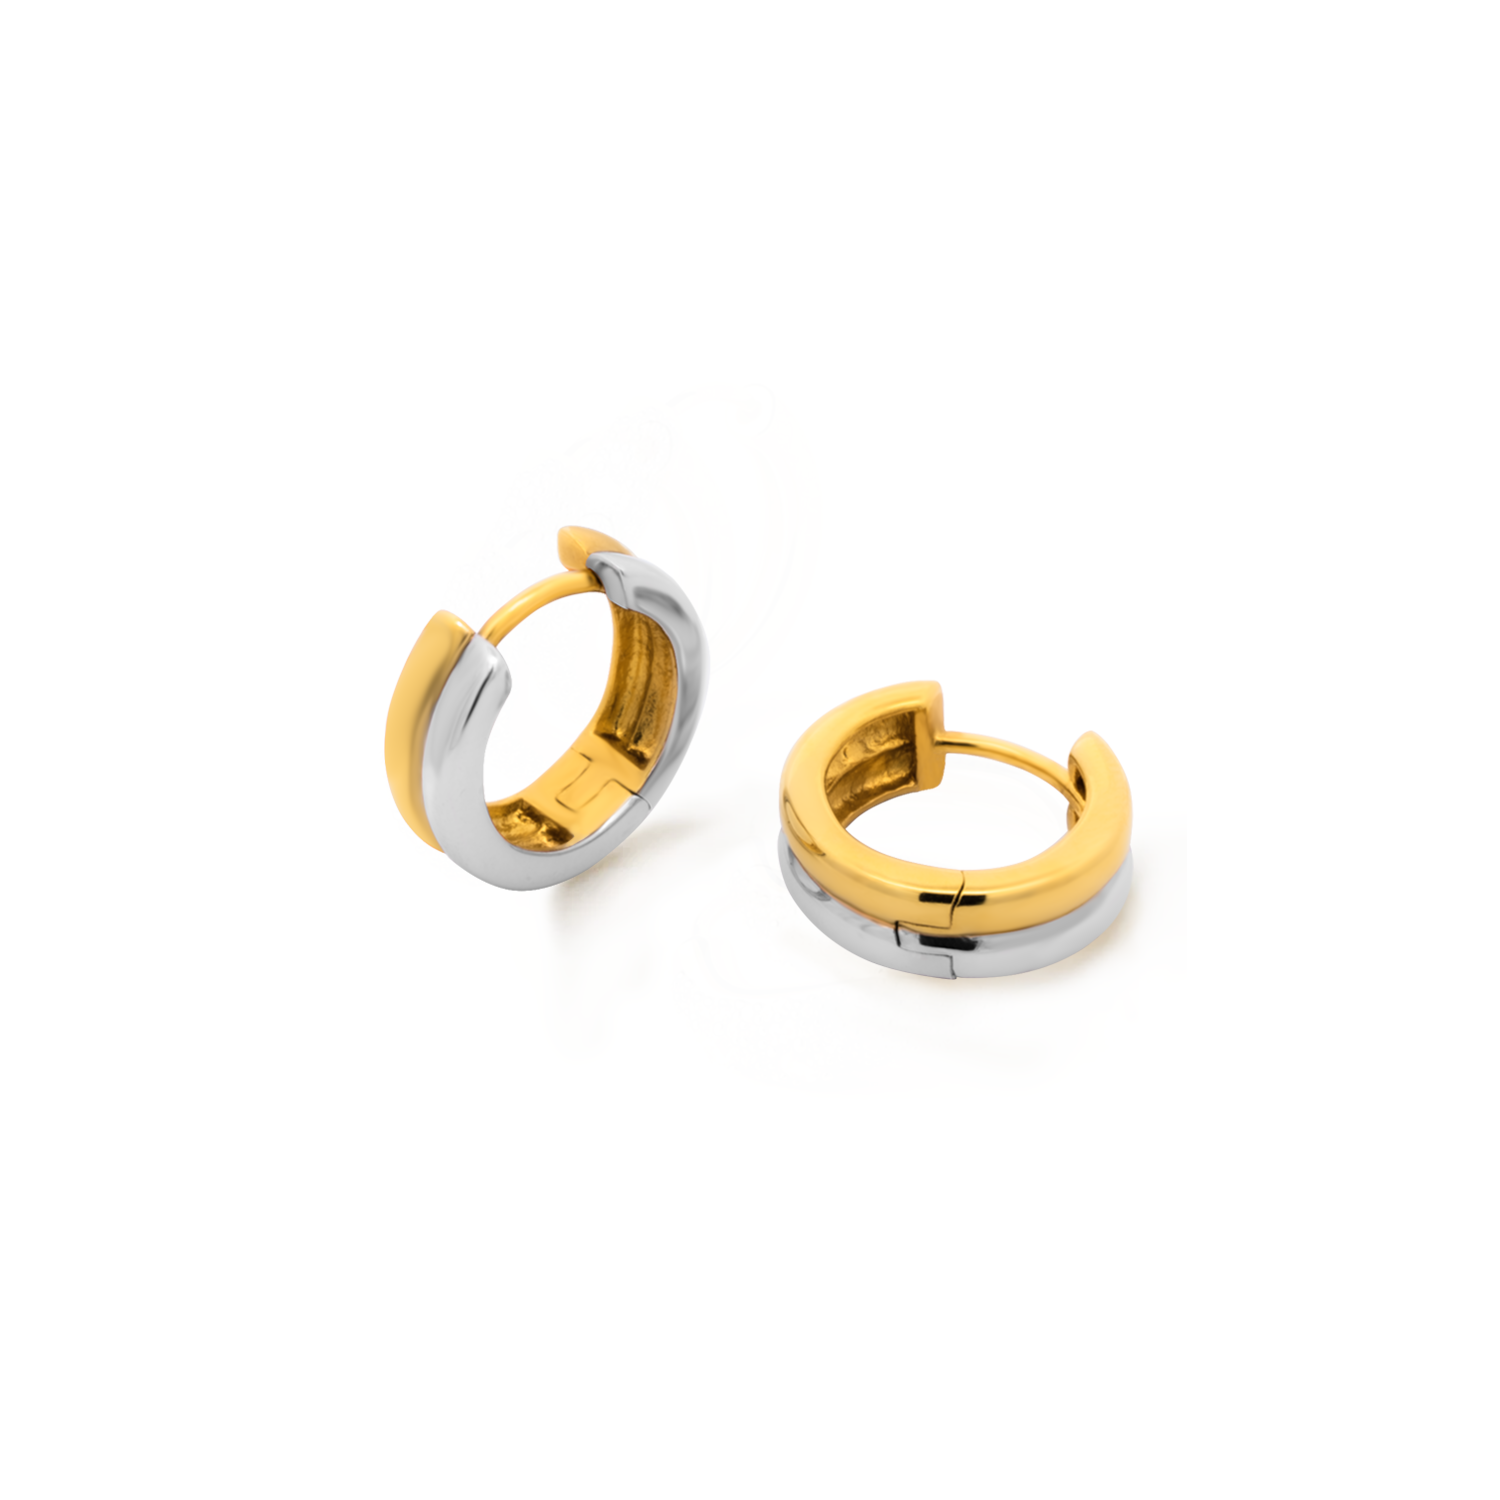 Elegant and minimalist earrings. 925 silver and gold huggies in medium.